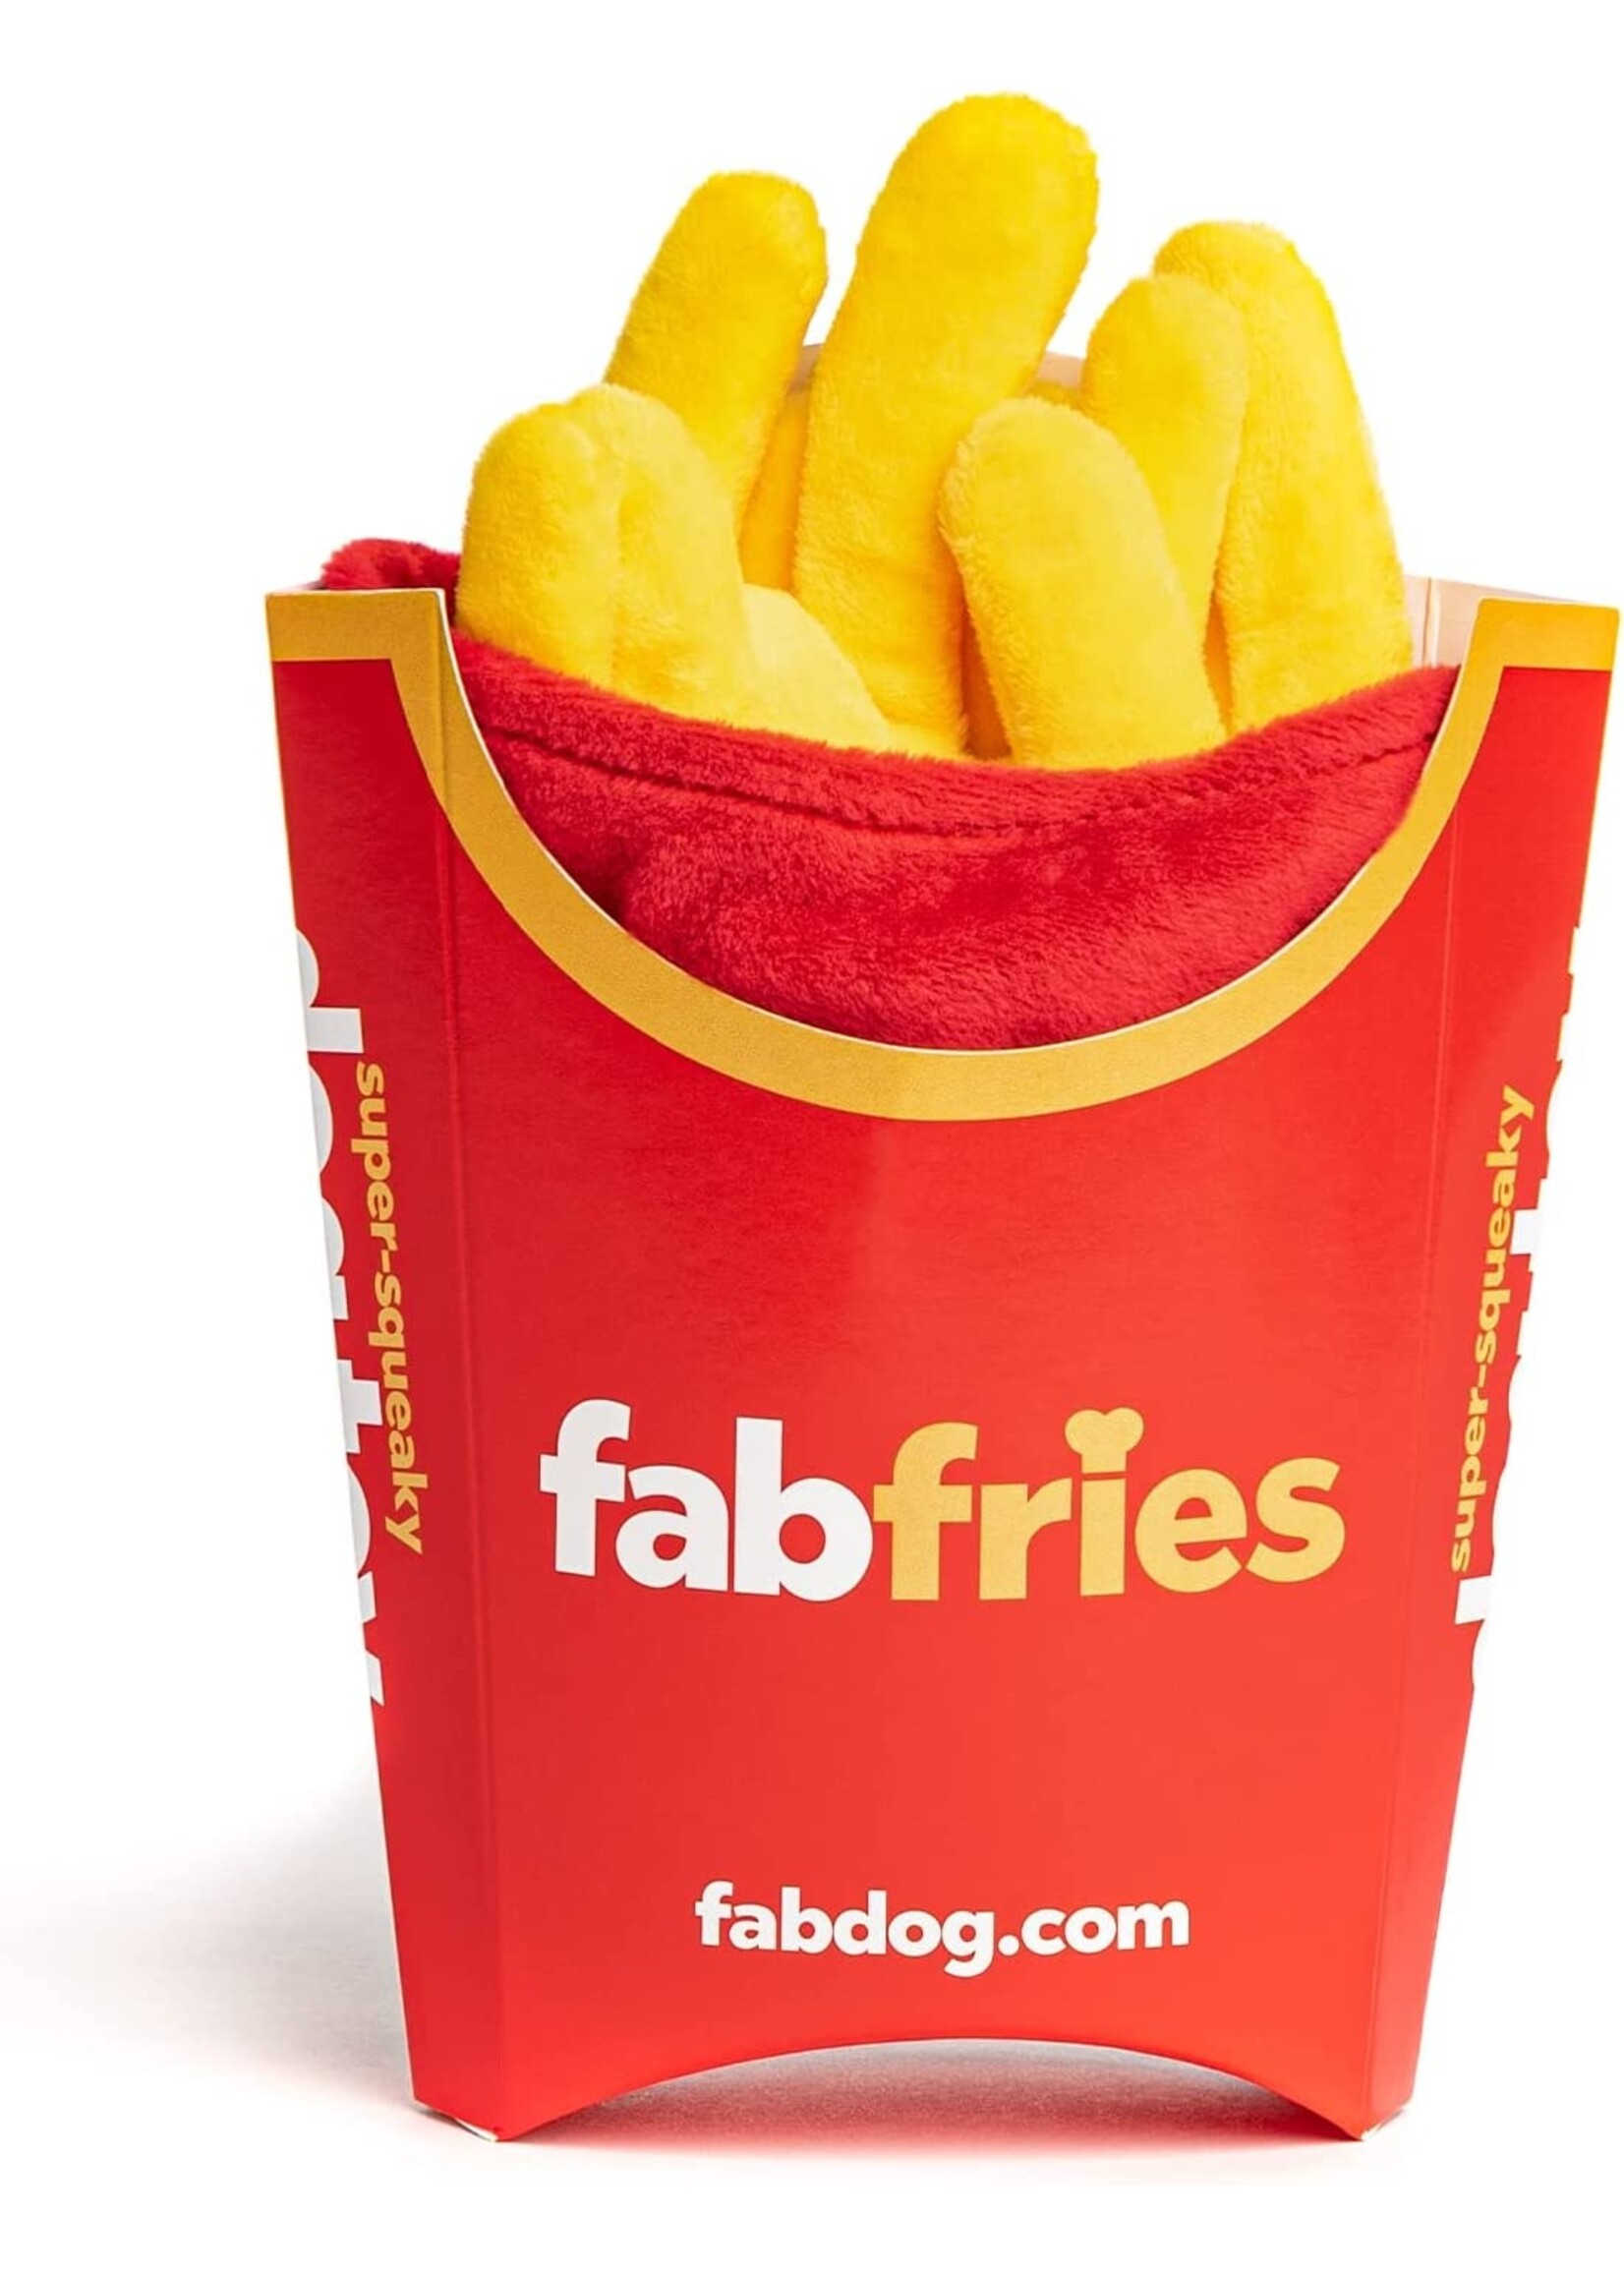 Fabdog Fabdog Foodies French Fries Super-Squeaker Toy